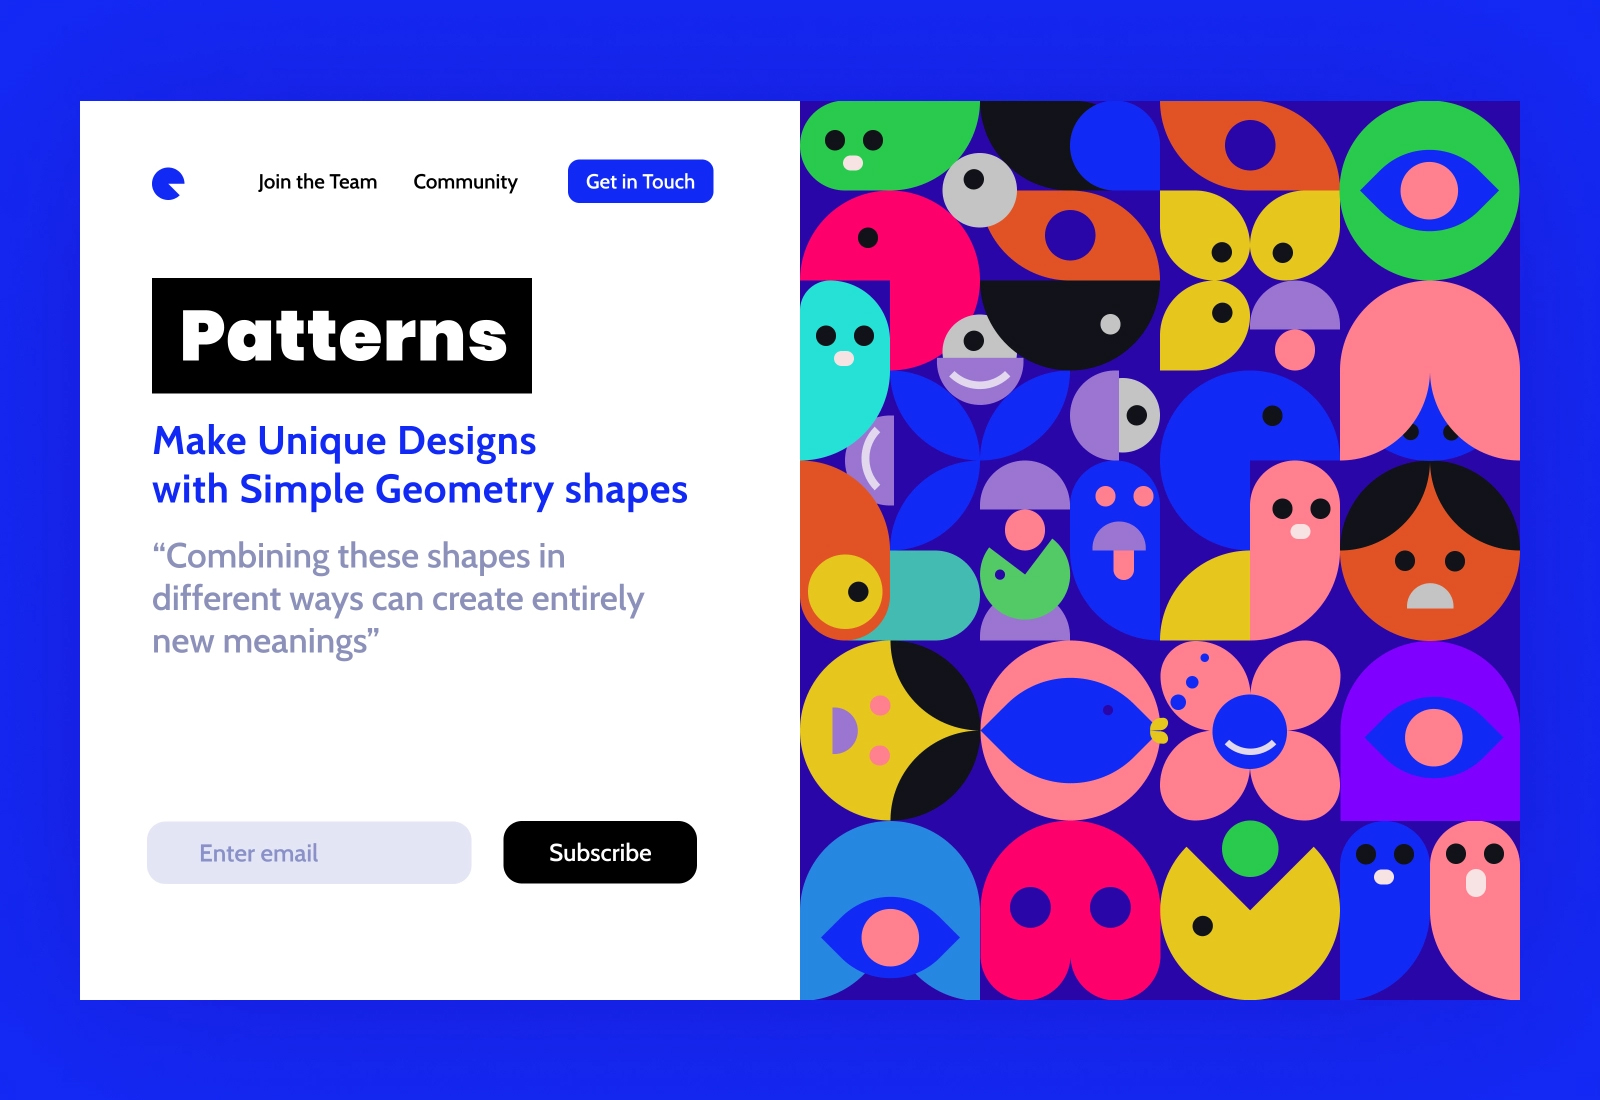 Patterns Landing page for Design Community